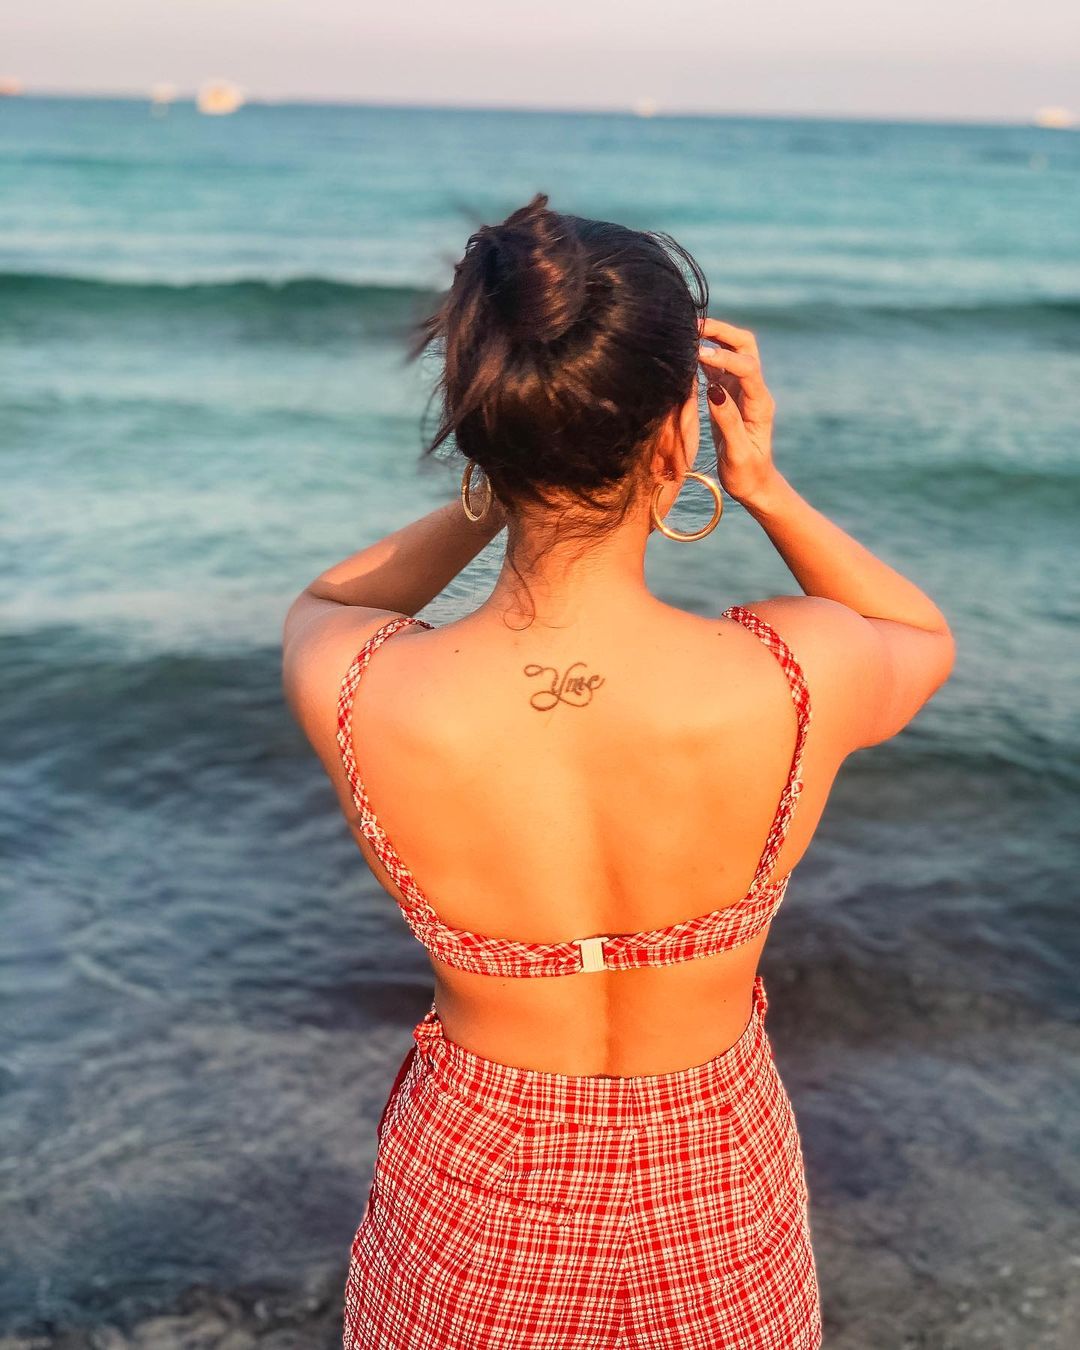 Samantha flaunts her back tattoo